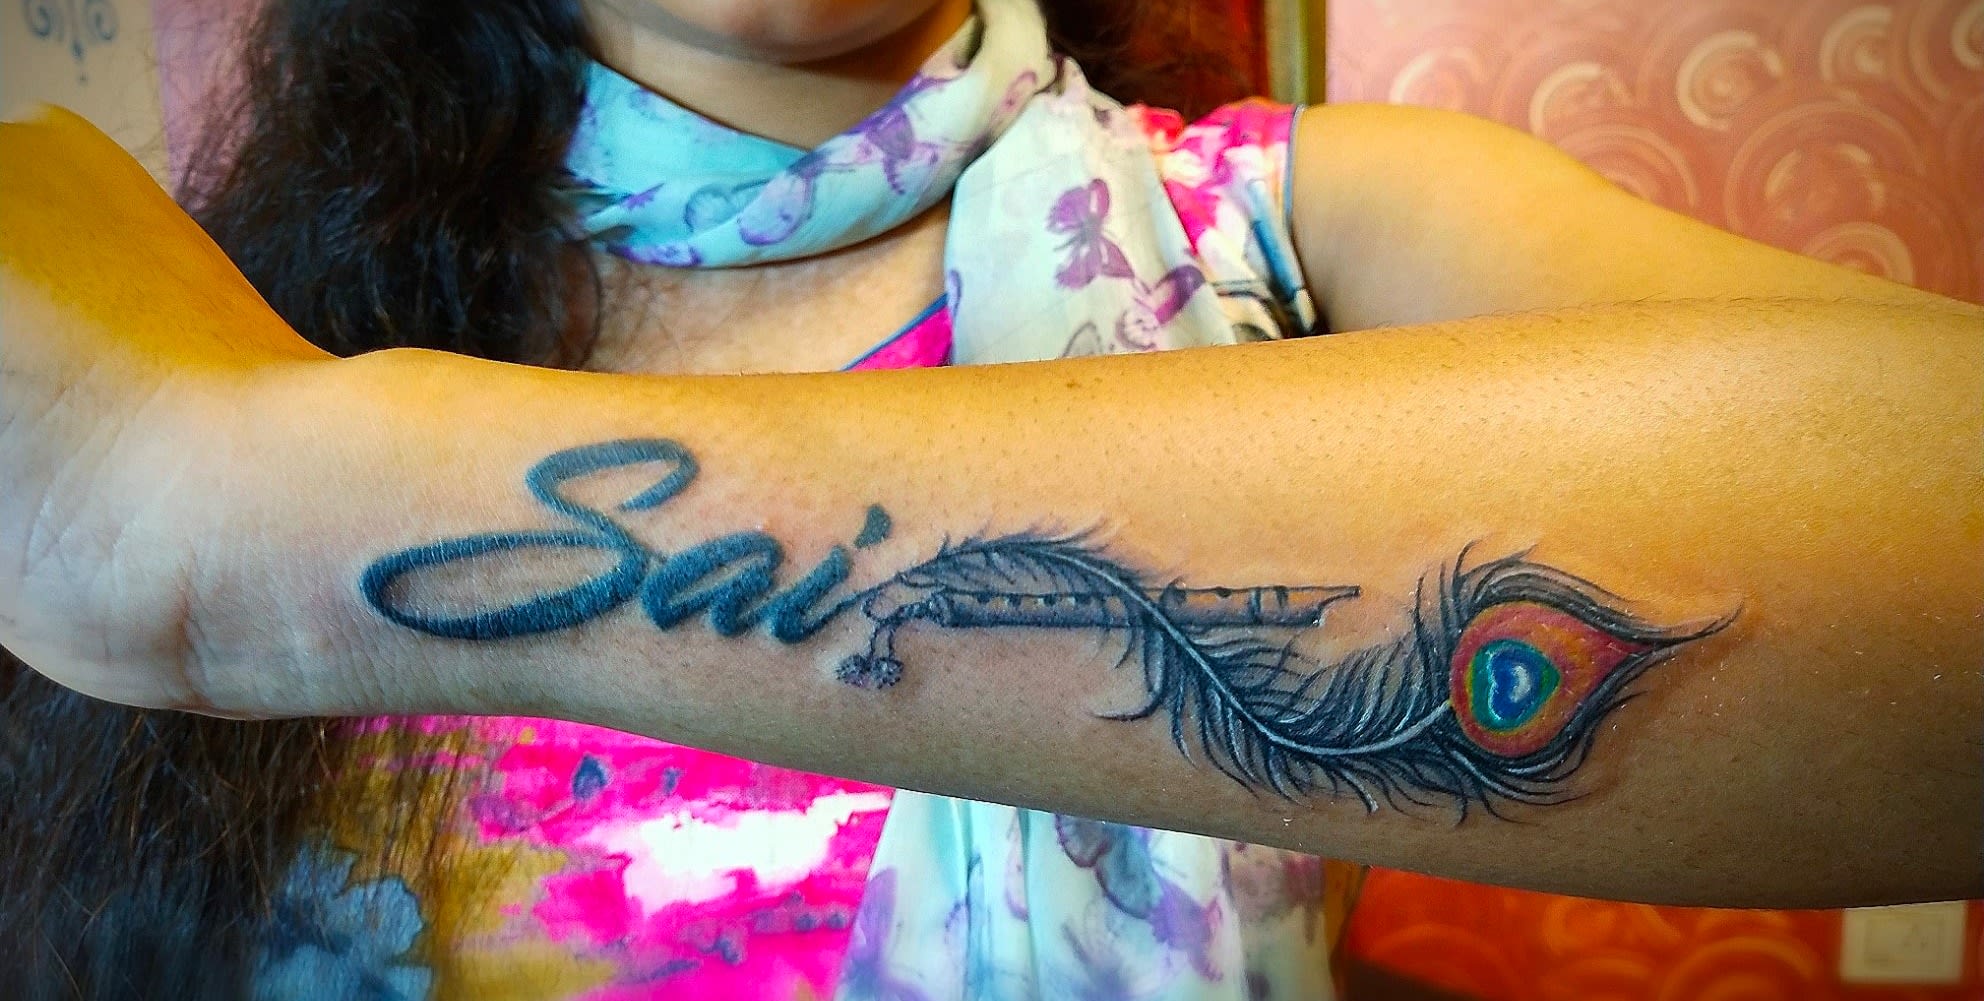 Aaisainametattoosmallwork  Shivaay tattoos  Facebook